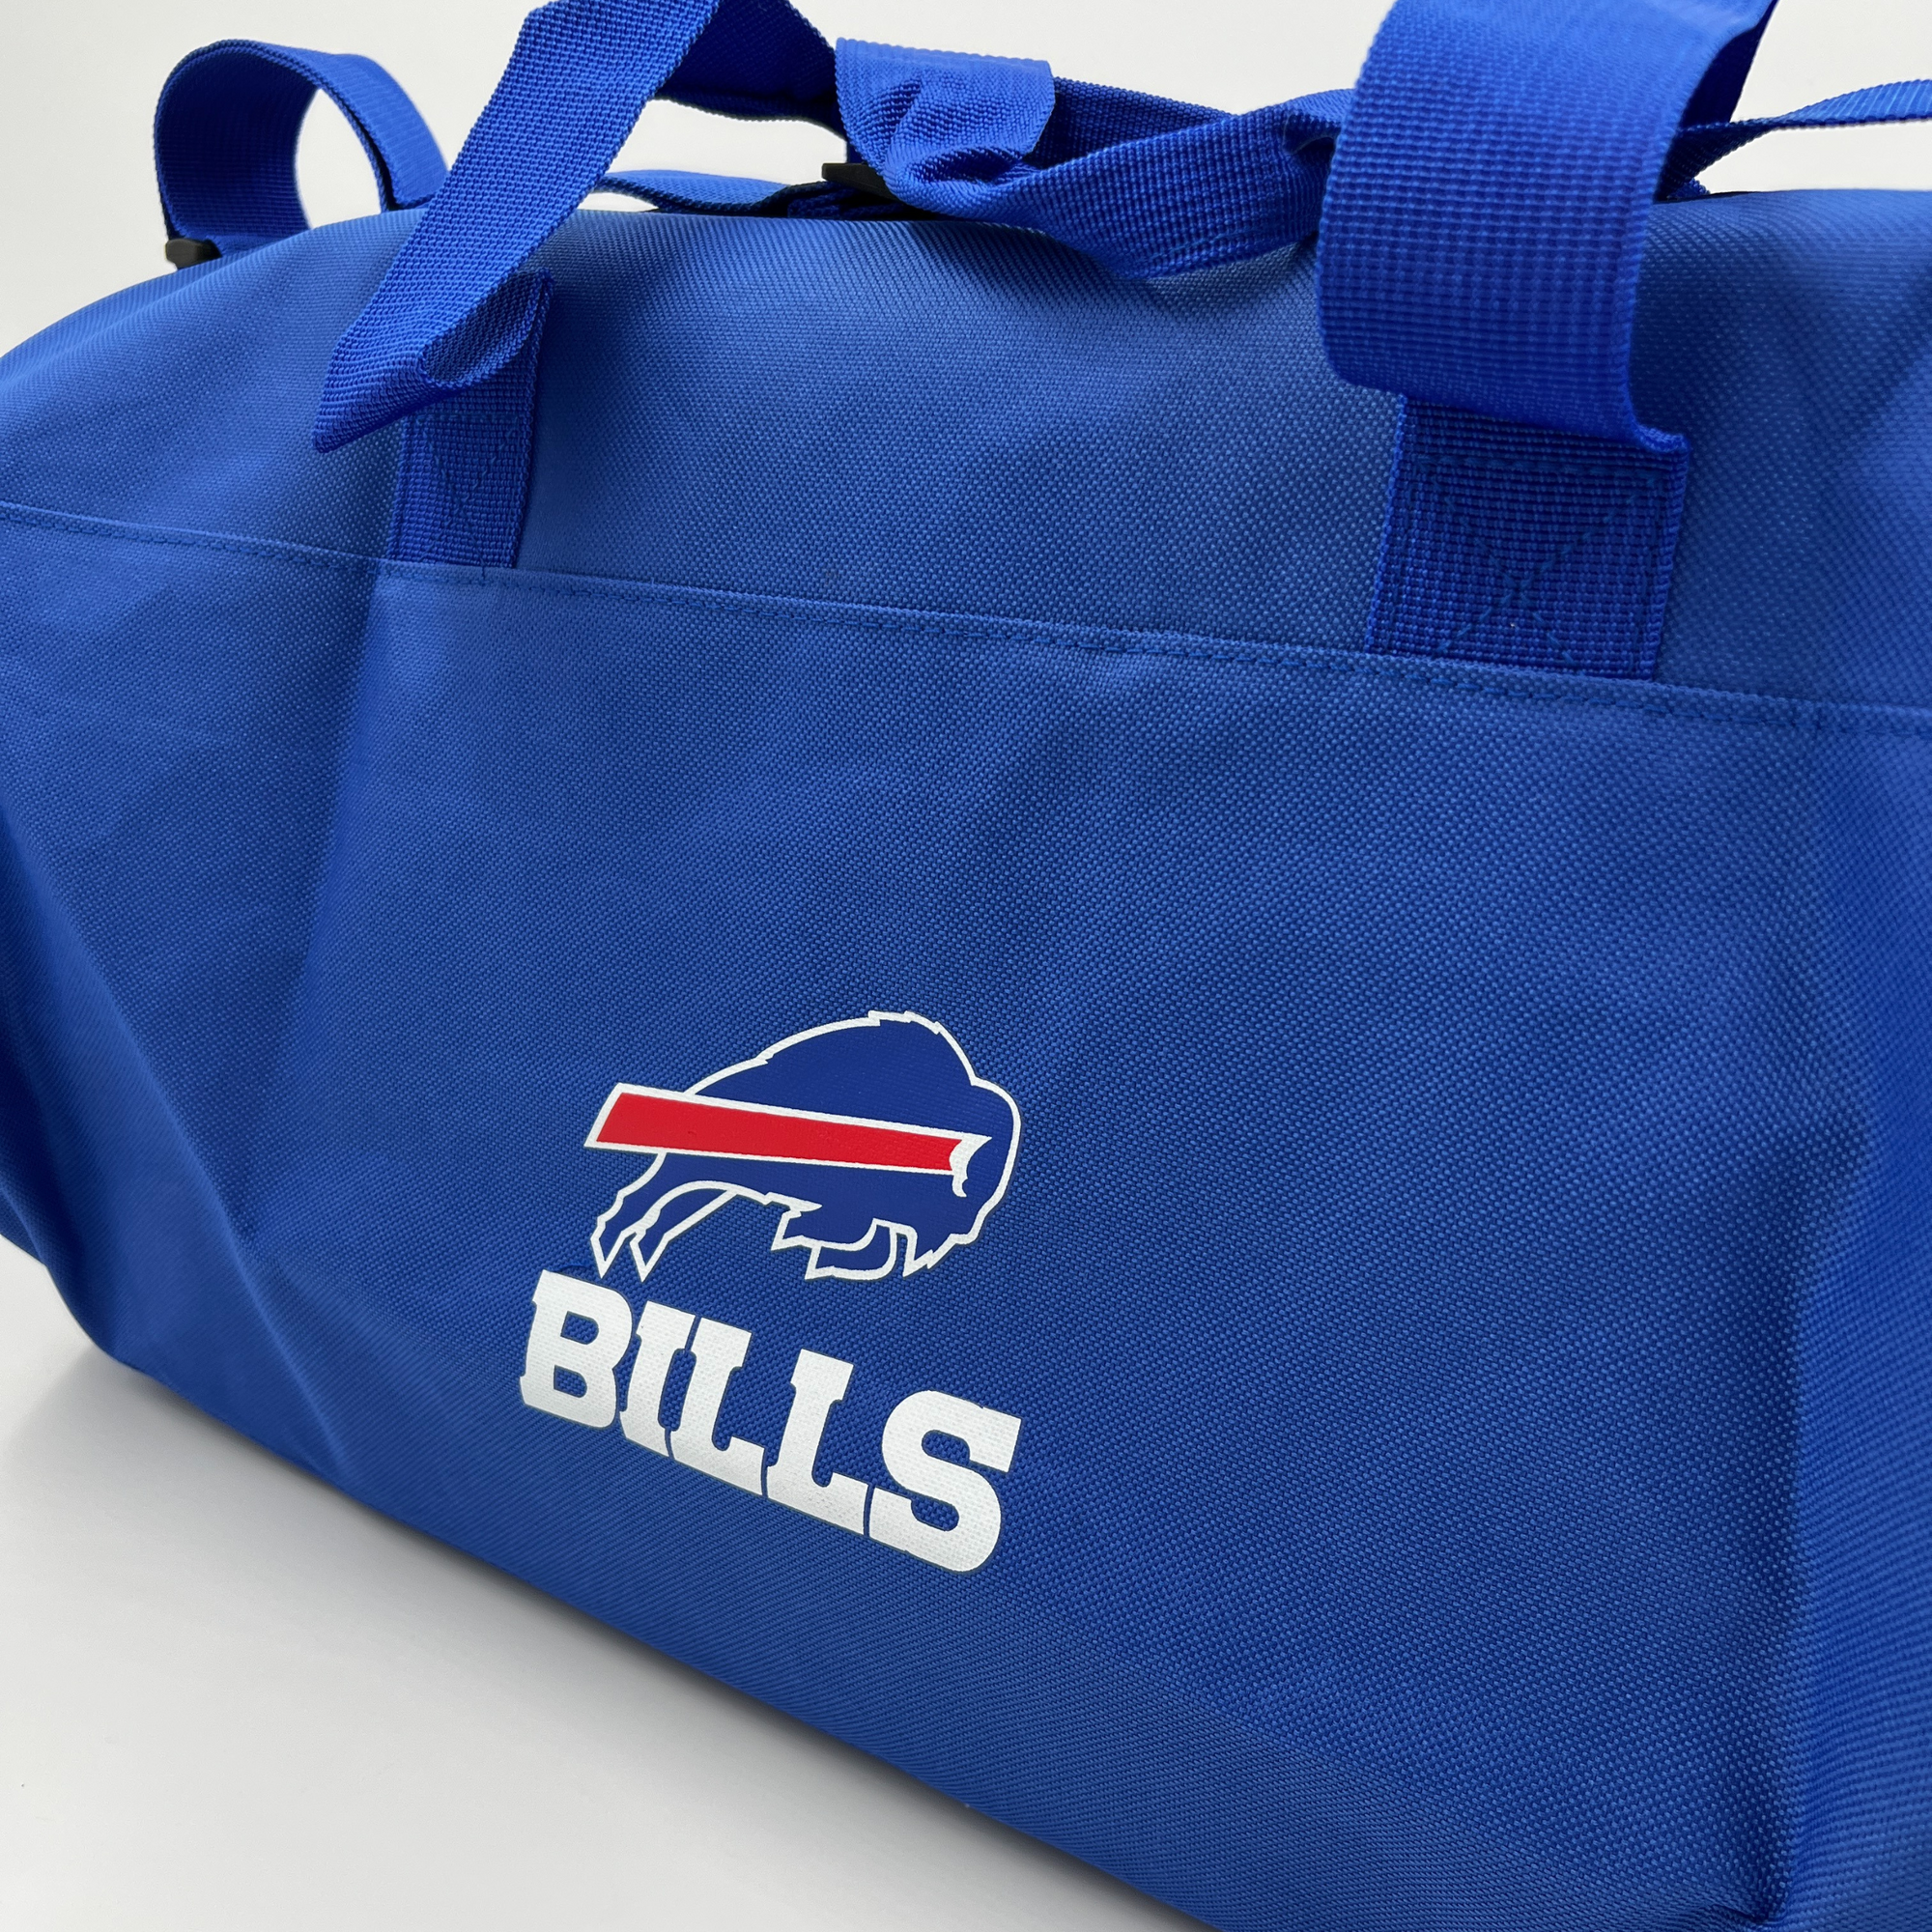 Buffalo Bills Royal Blue Duffle Bag